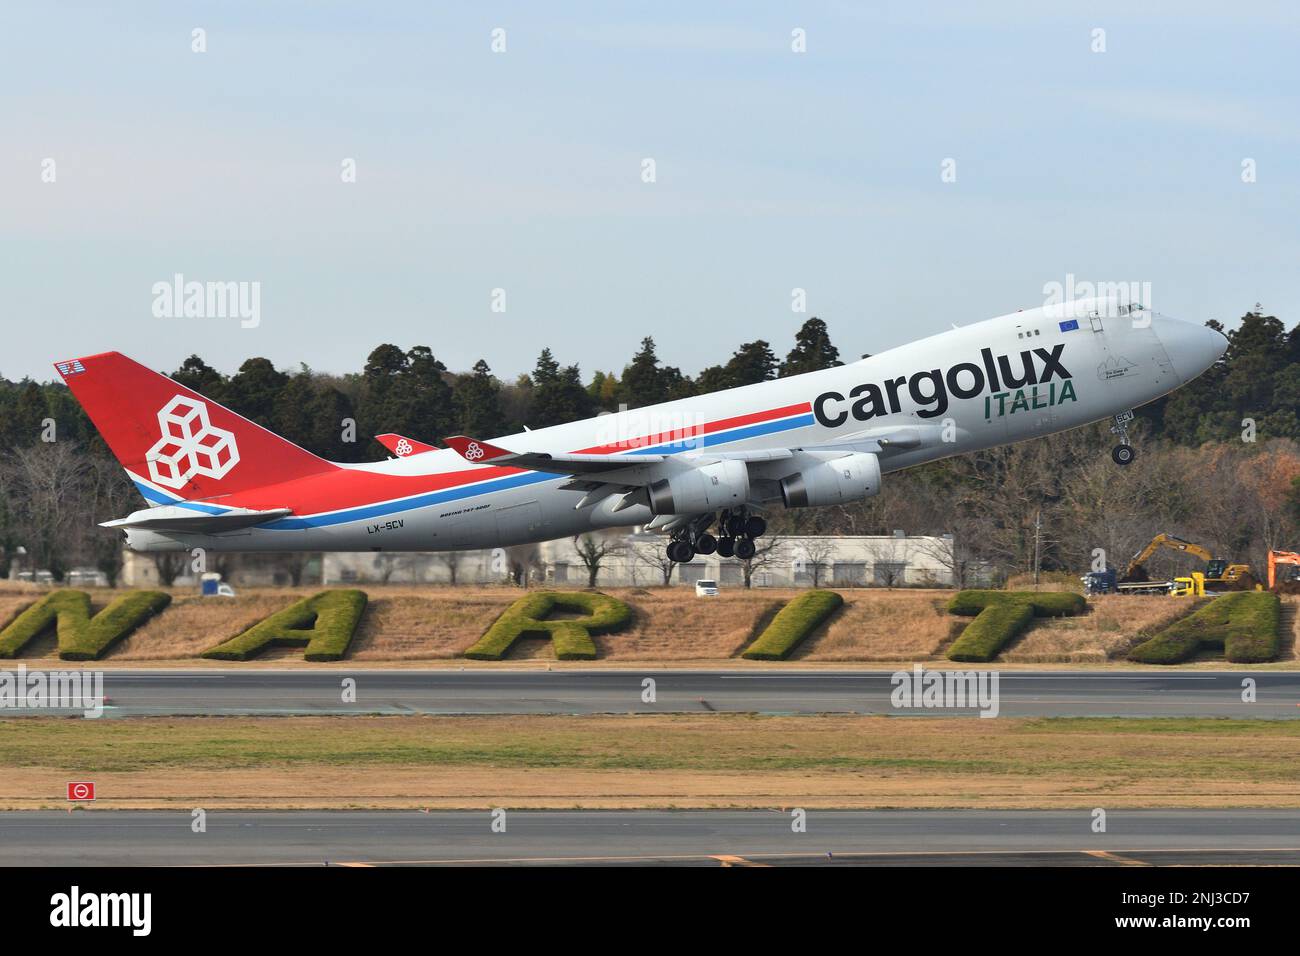 Chiba Prefecture, Japan - December 19, 2020: Cargolux Italia Boeing B747-400F (LX-SCV) freighter. Stock Photo